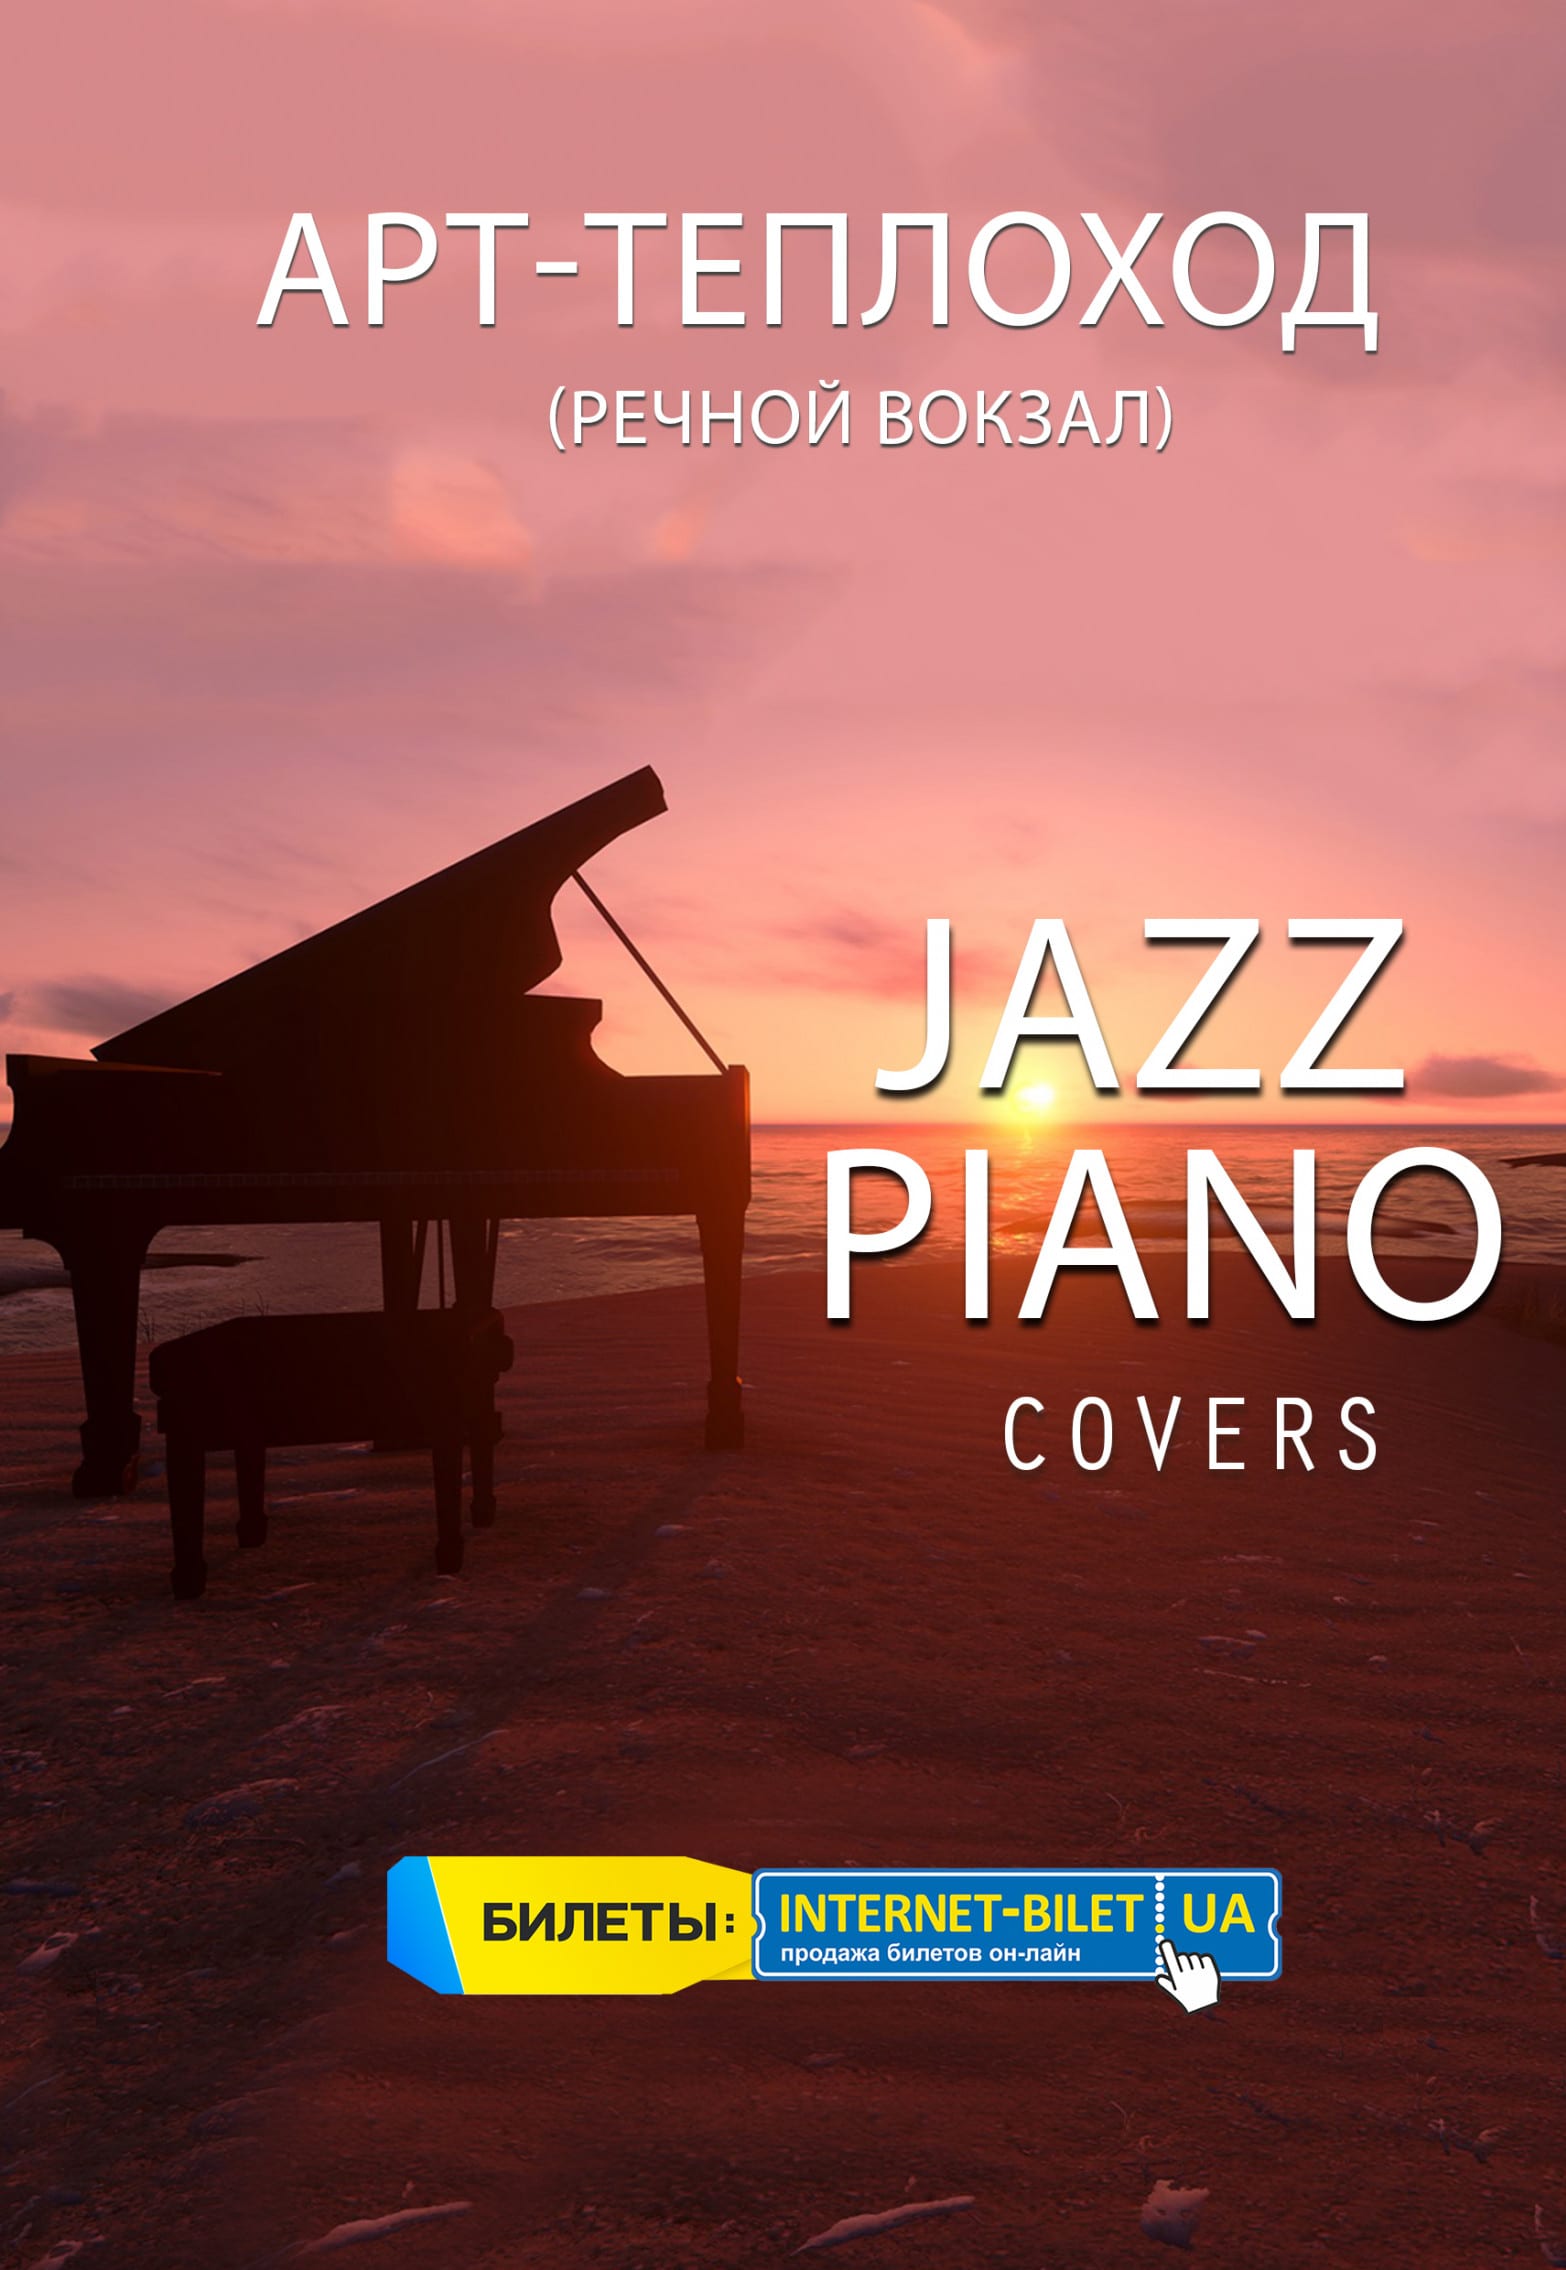 Jazz Piano на Арт-Теплоходе Днепр, 24.06.2019, цена, купить билеты. Афиша Днепра